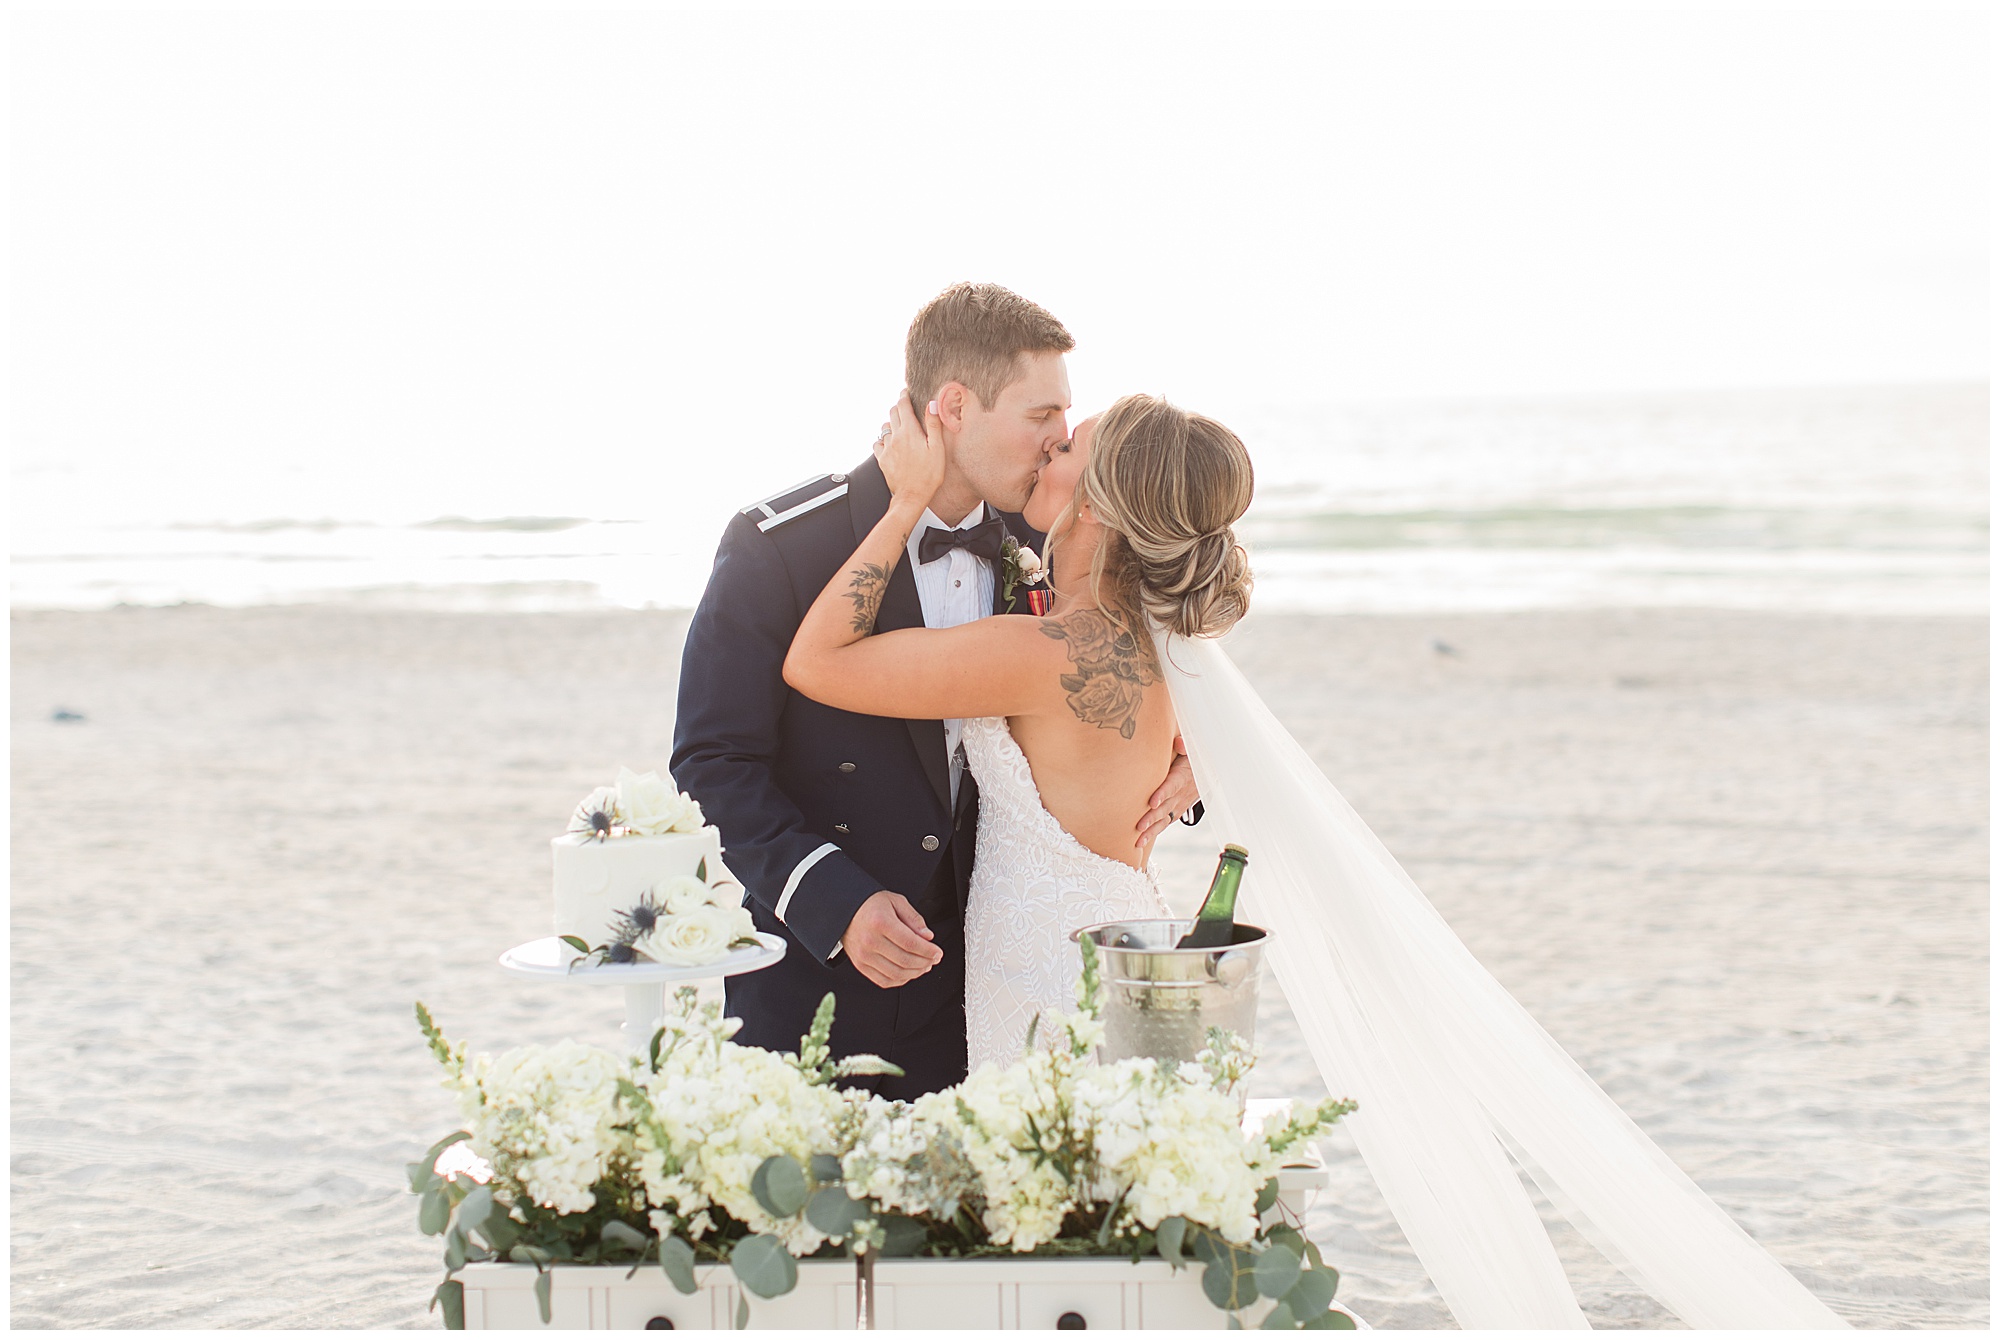 Jace & Anton, Pass-A-Grille Beach, St. Petersburg Florida wedding, Kelley Stinson Photography, beach wedding, bride and groom